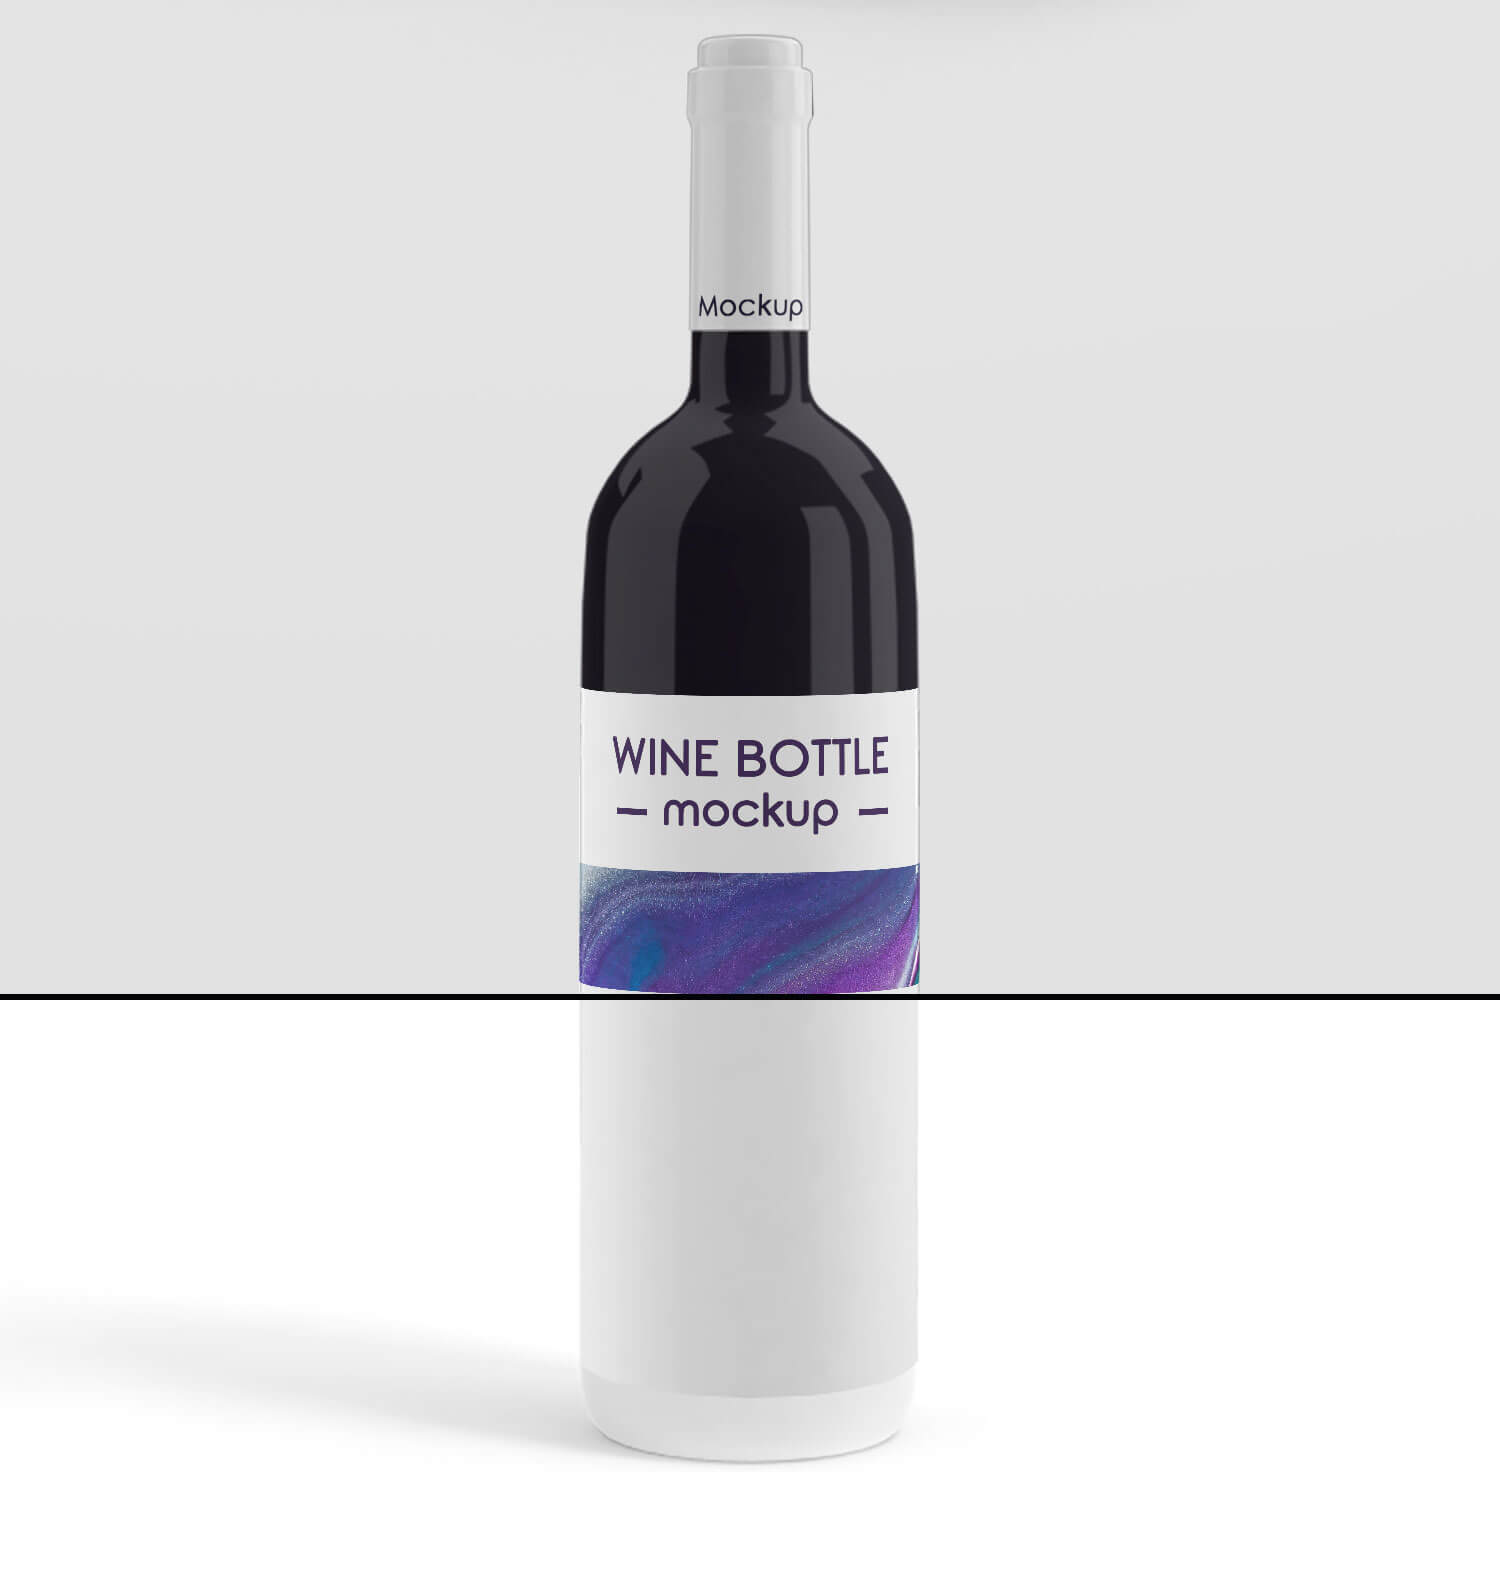 Four Mockups of Modern Wine Bottle Packaging5